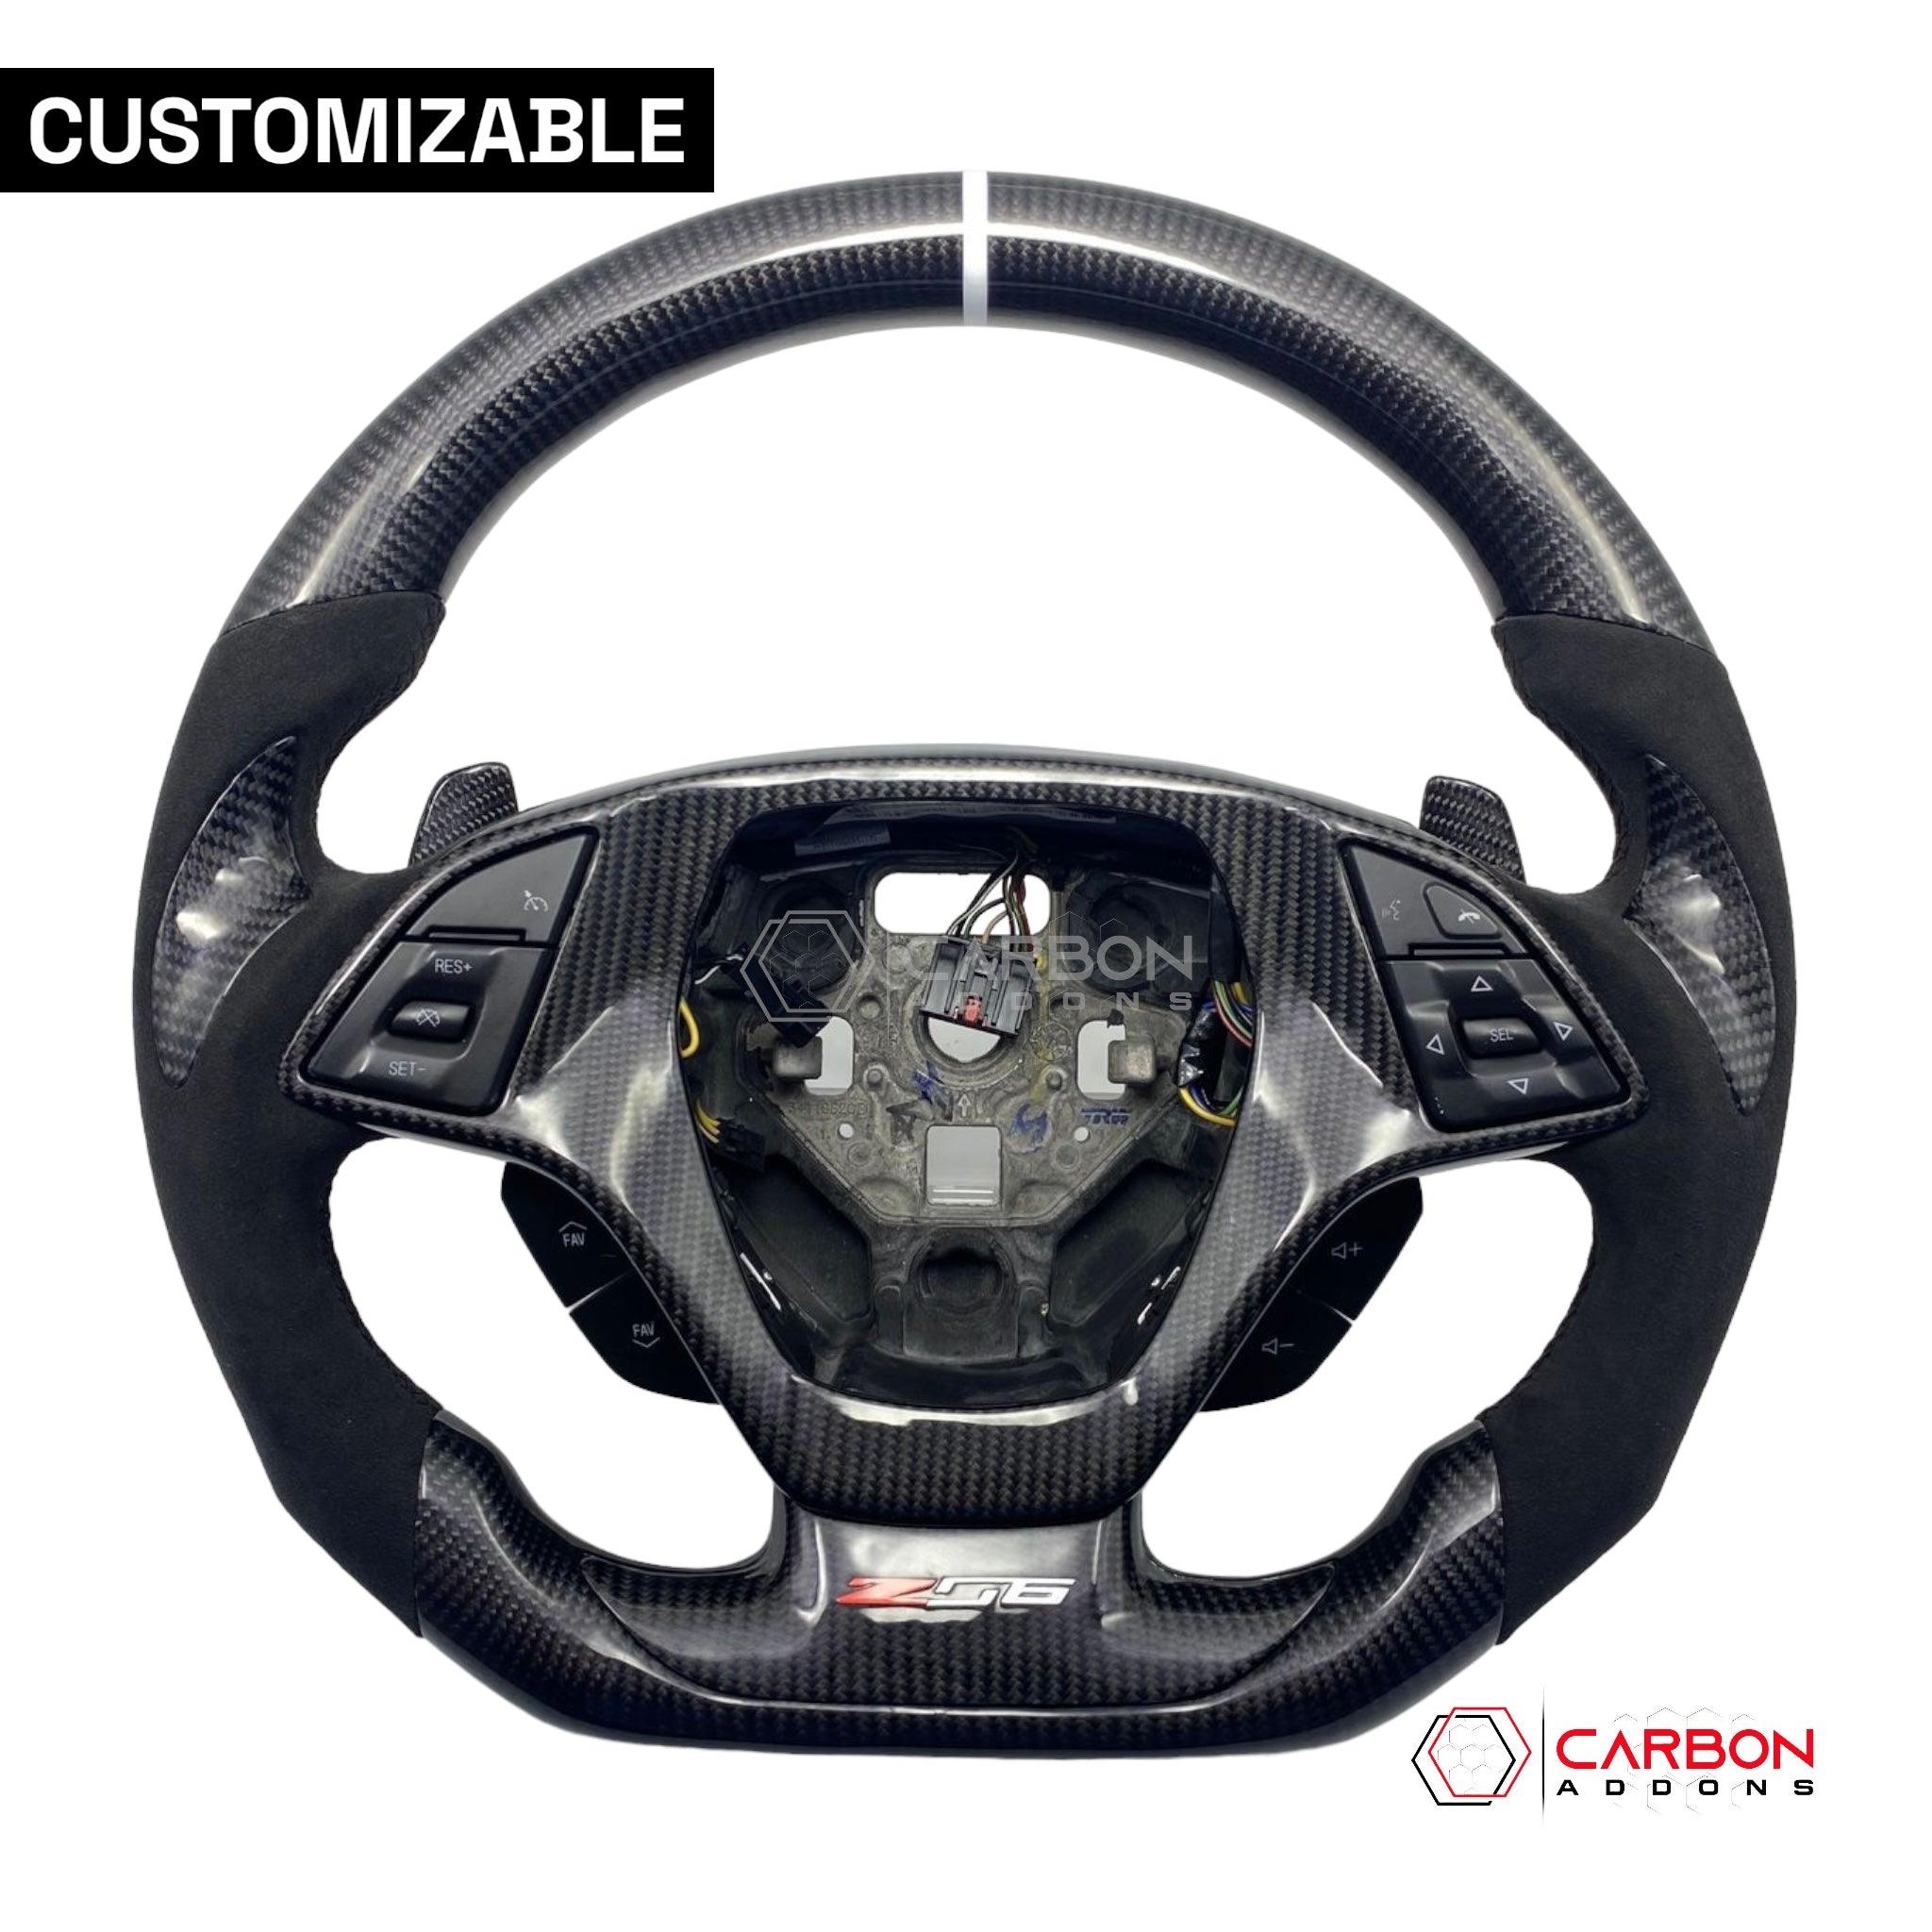 [Complete] Custom Carbon Fiber Steering Wheel C7 Corvette Stingray/Z06/Grand Sport 2014-2019 - carbonaddons Carbon Fiber Parts, Accessories, Upgrades, Mods